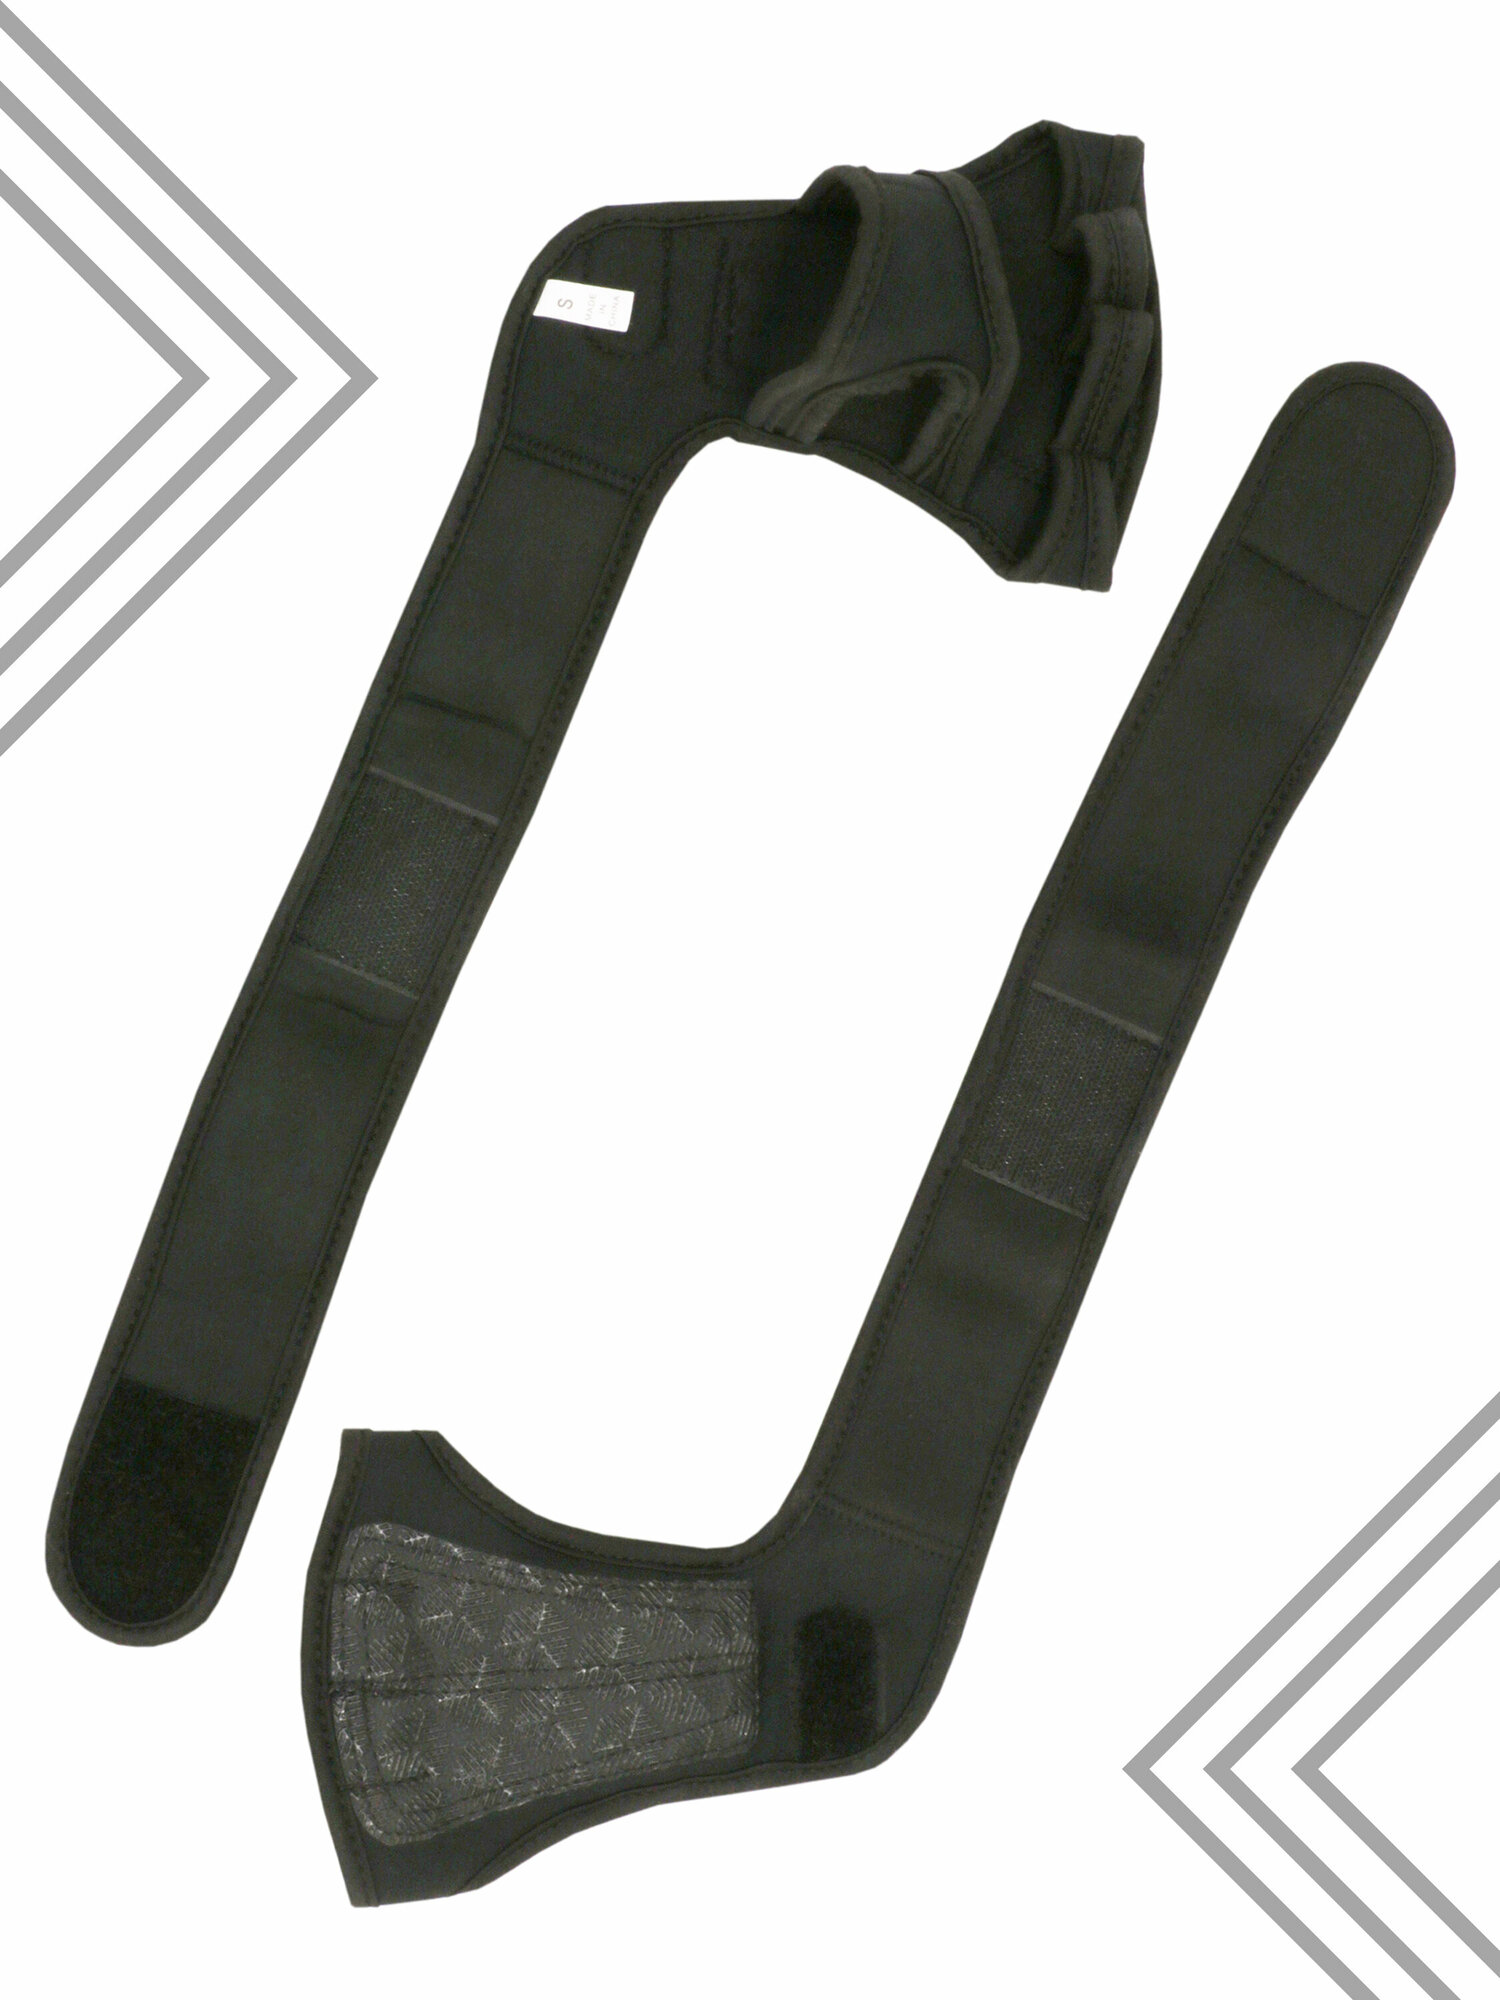 Перчатки для турника и грифа Boomshakalaka, цвет черный, размер XL, обхват ладони 238-259 мм.